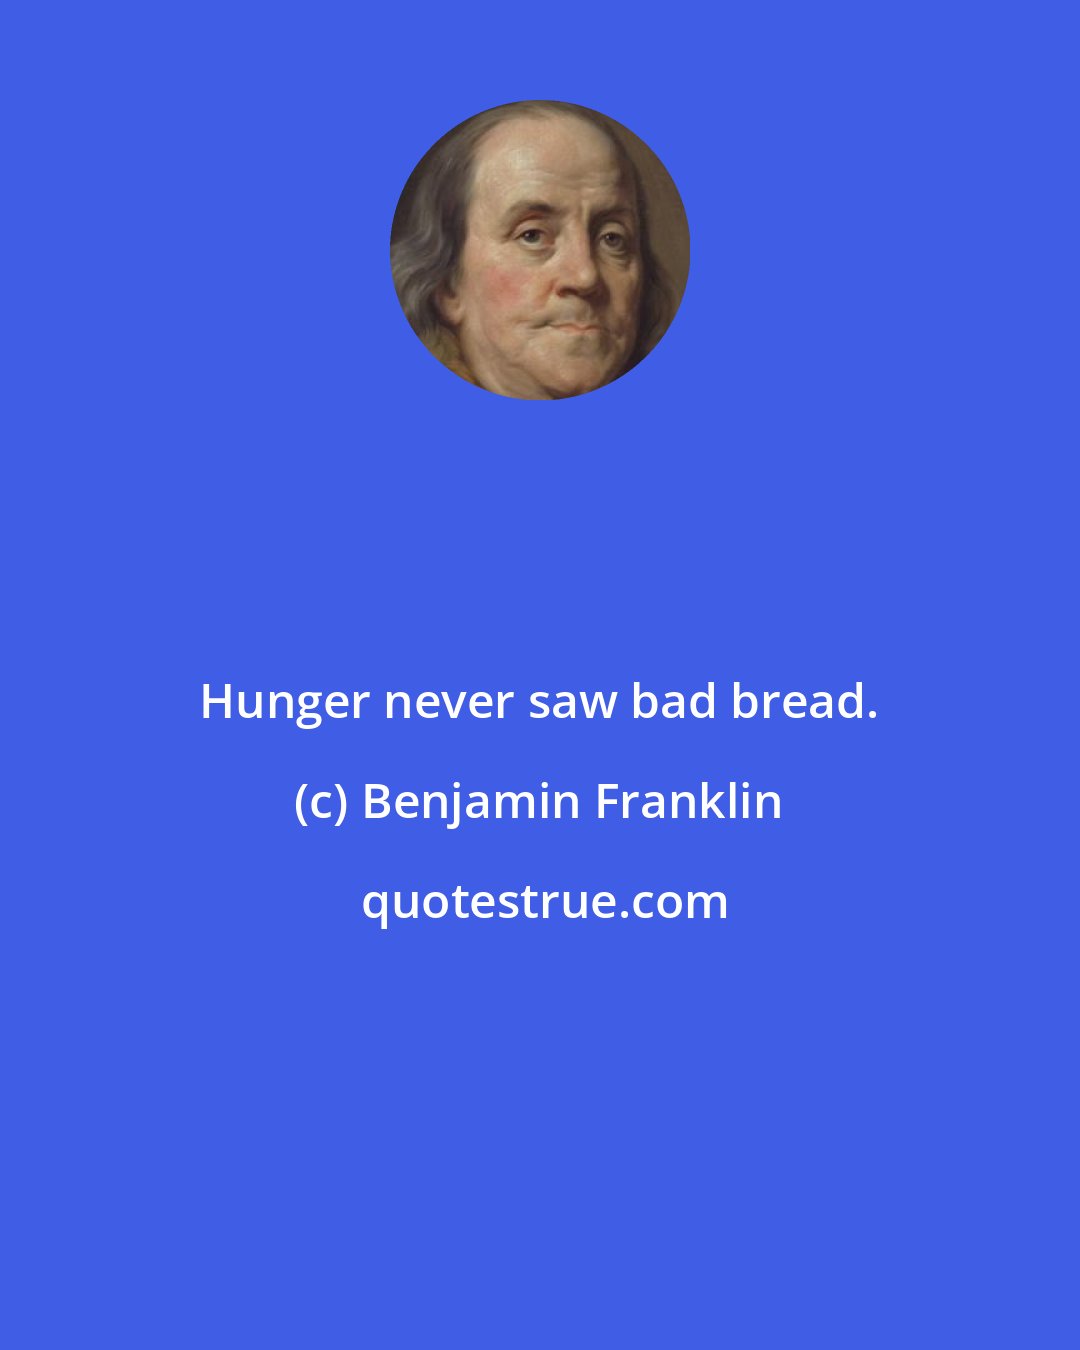 Benjamin Franklin: Hunger never saw bad bread.